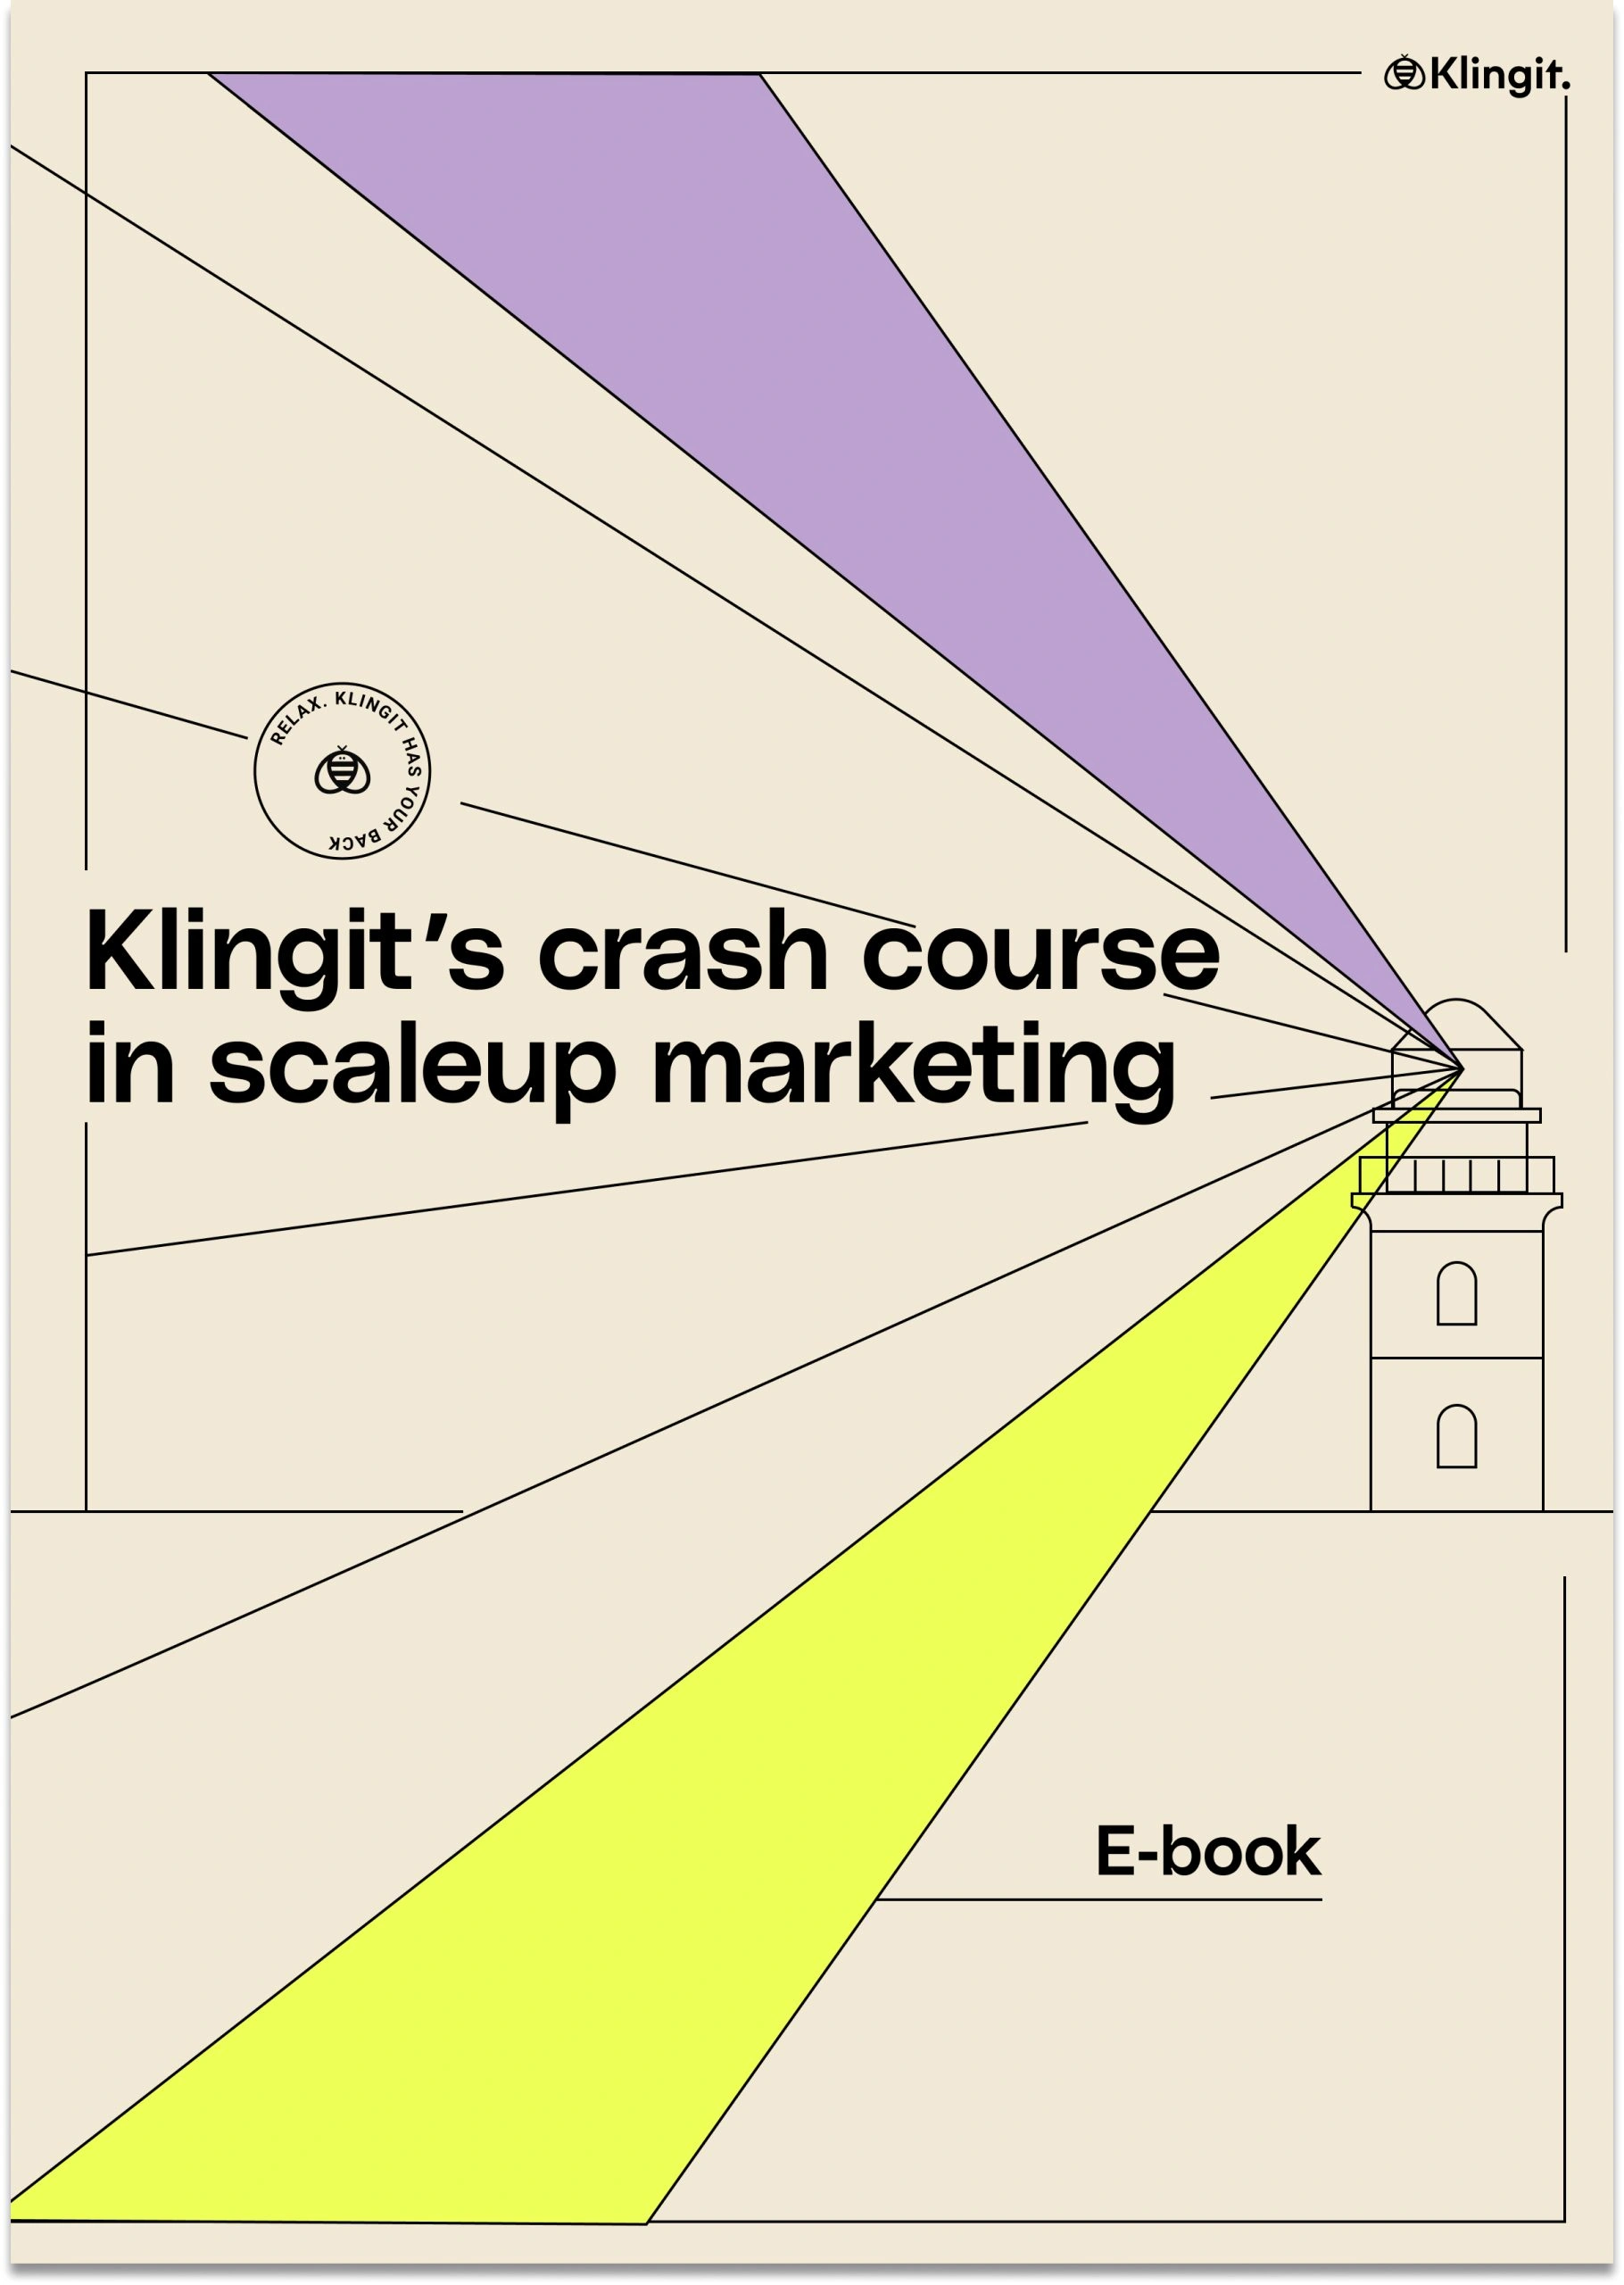 Klingit’s crash course in scale-up marketing